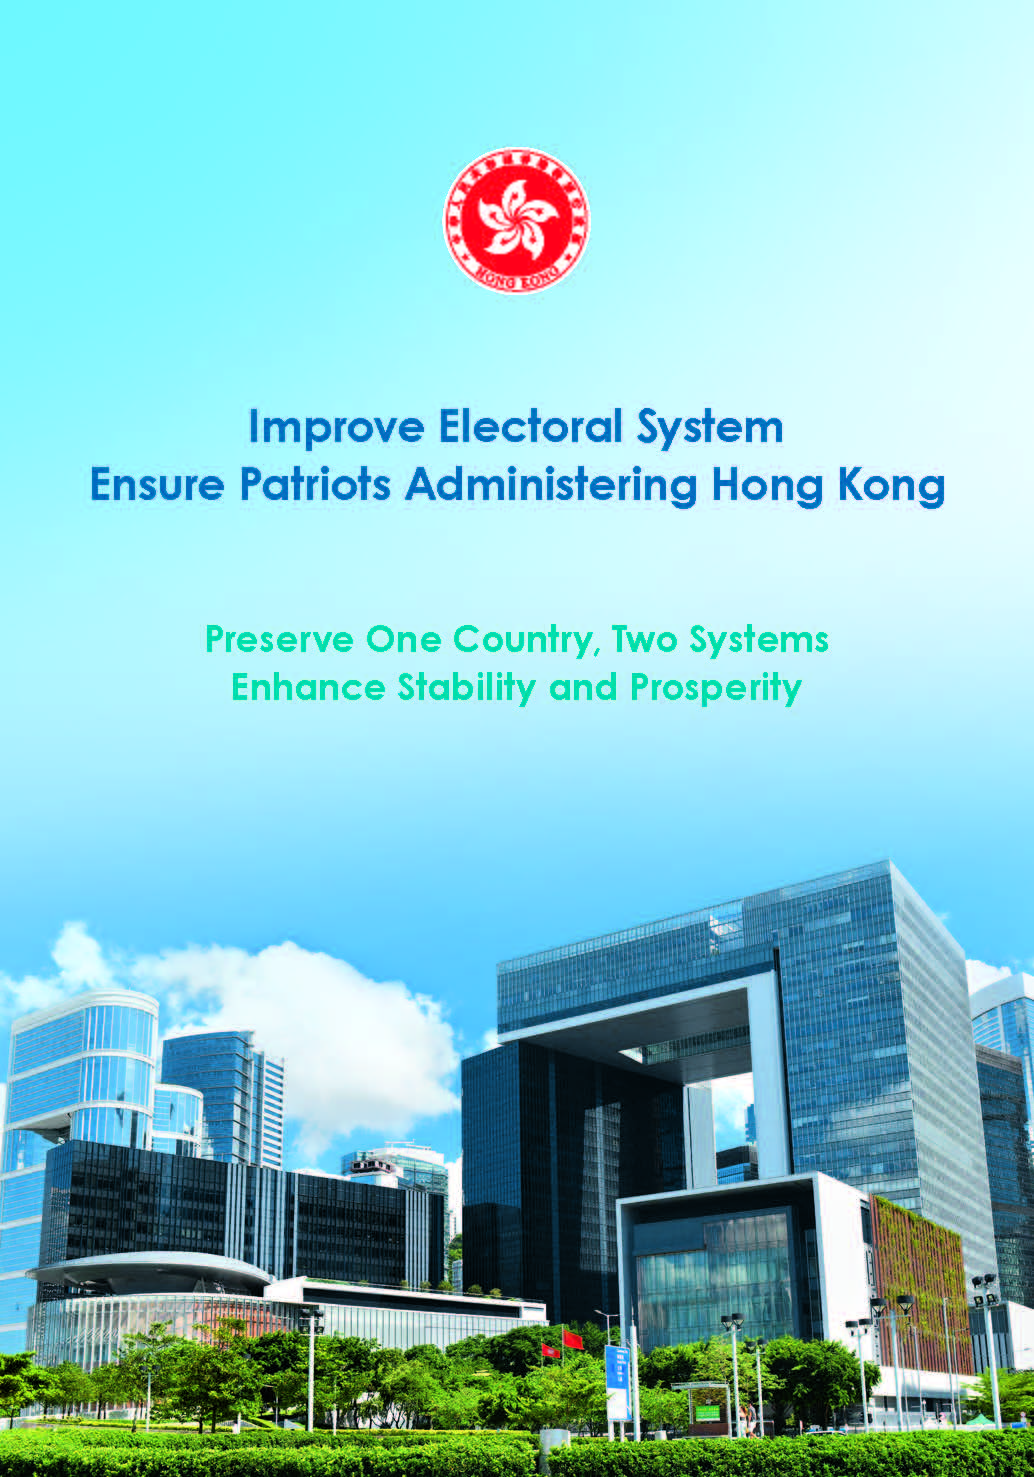 Booklet on "Improve Electoral System Ensure Patriots Administering Hong Kong"